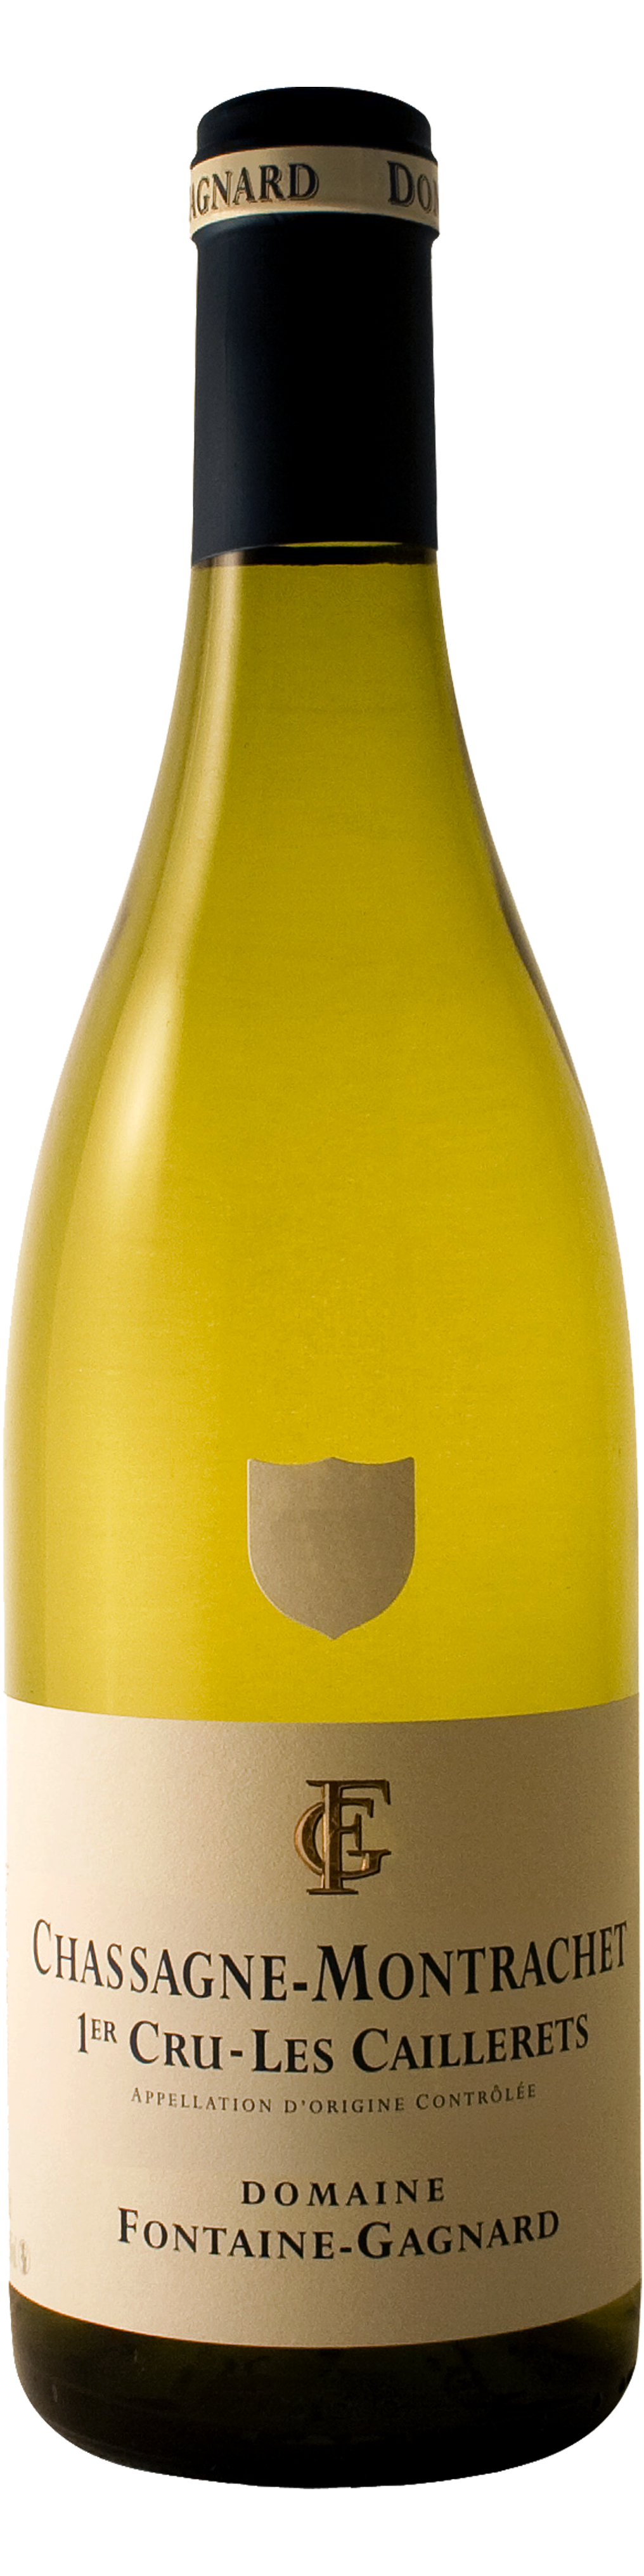 Bottle shot of 2012 Chassagne Montrachet 1er Cru Caillerets